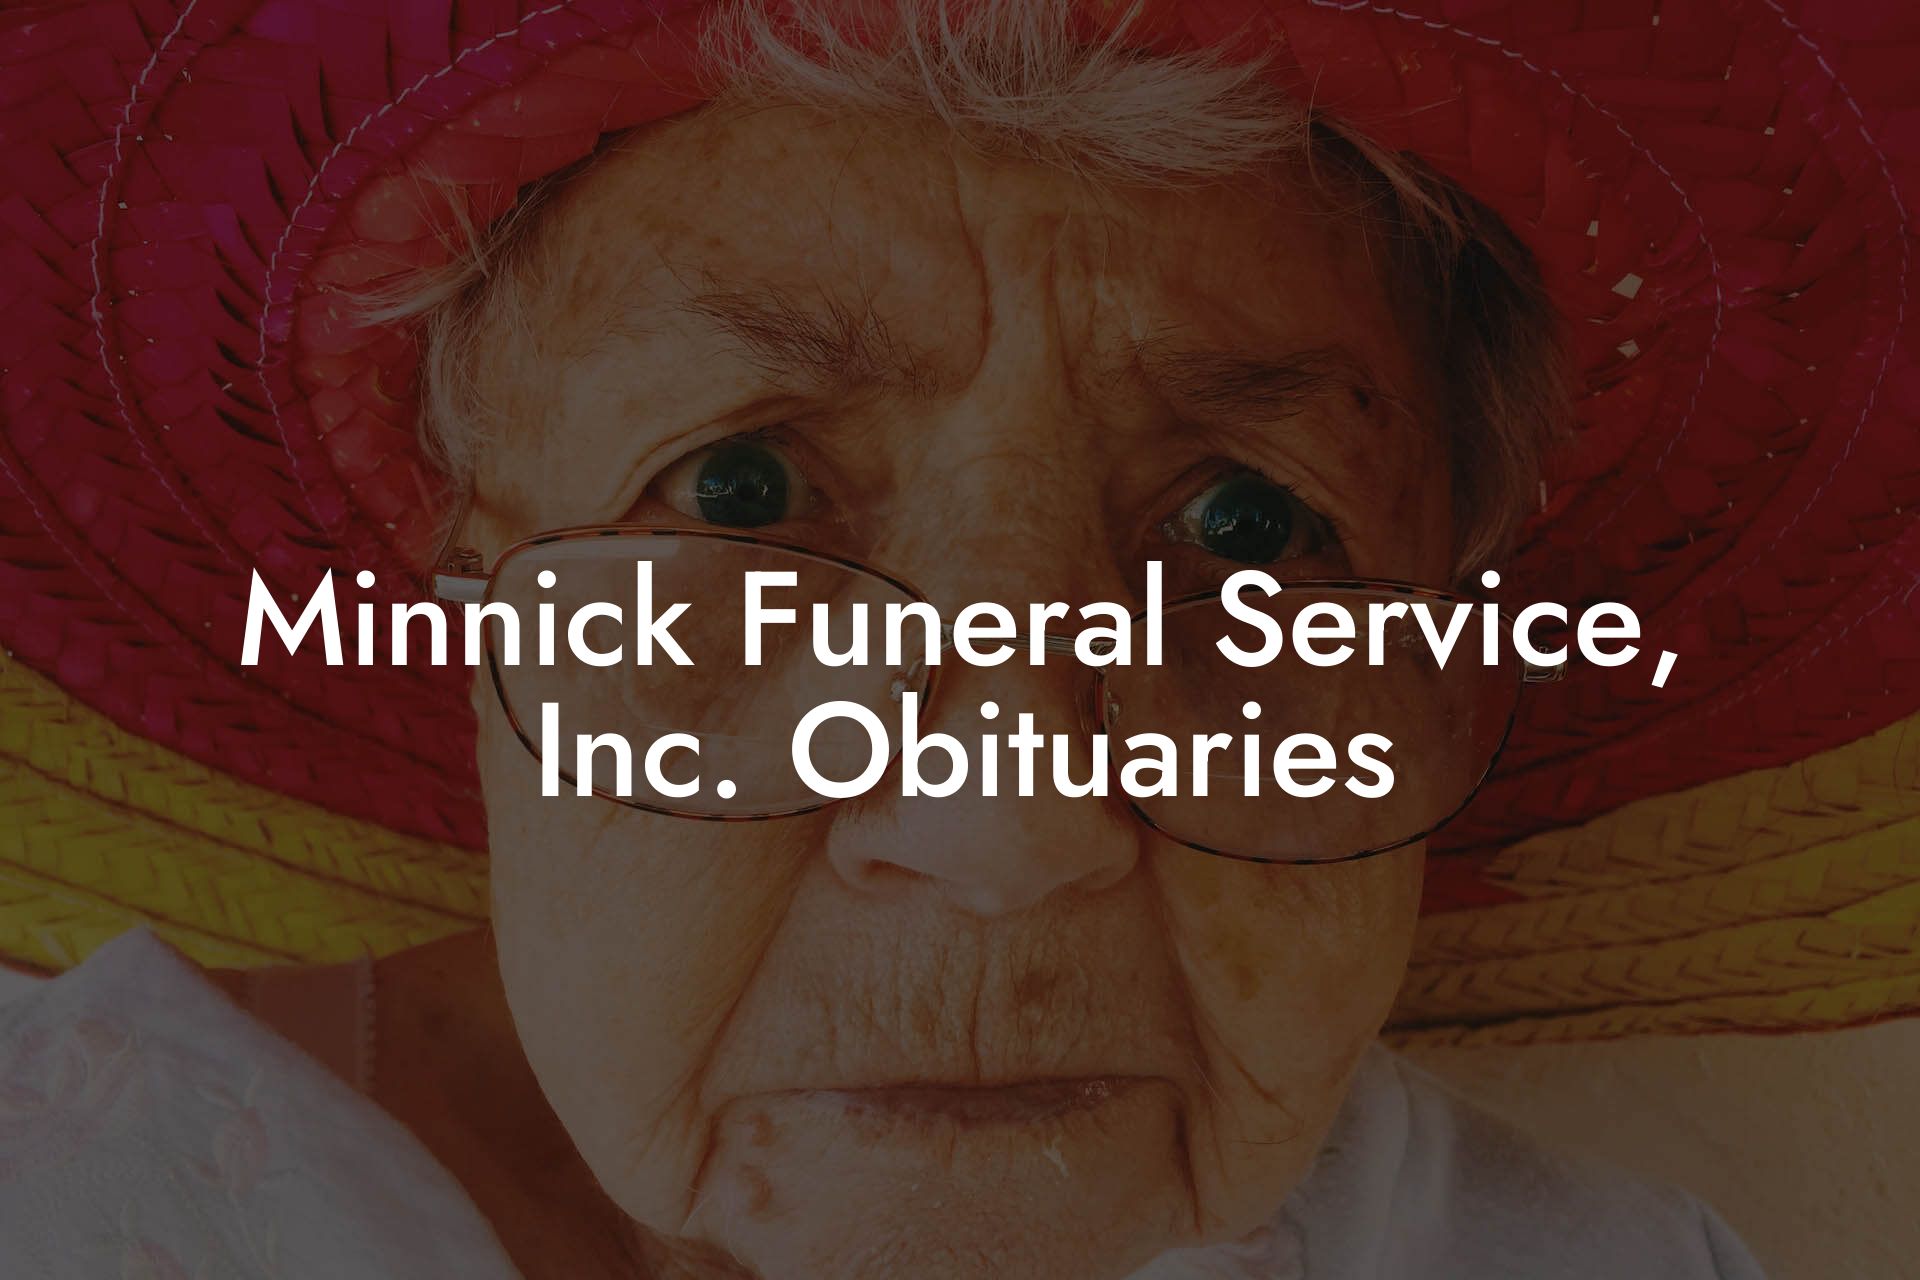 Minnick Funeral Service, Inc. Obituaries